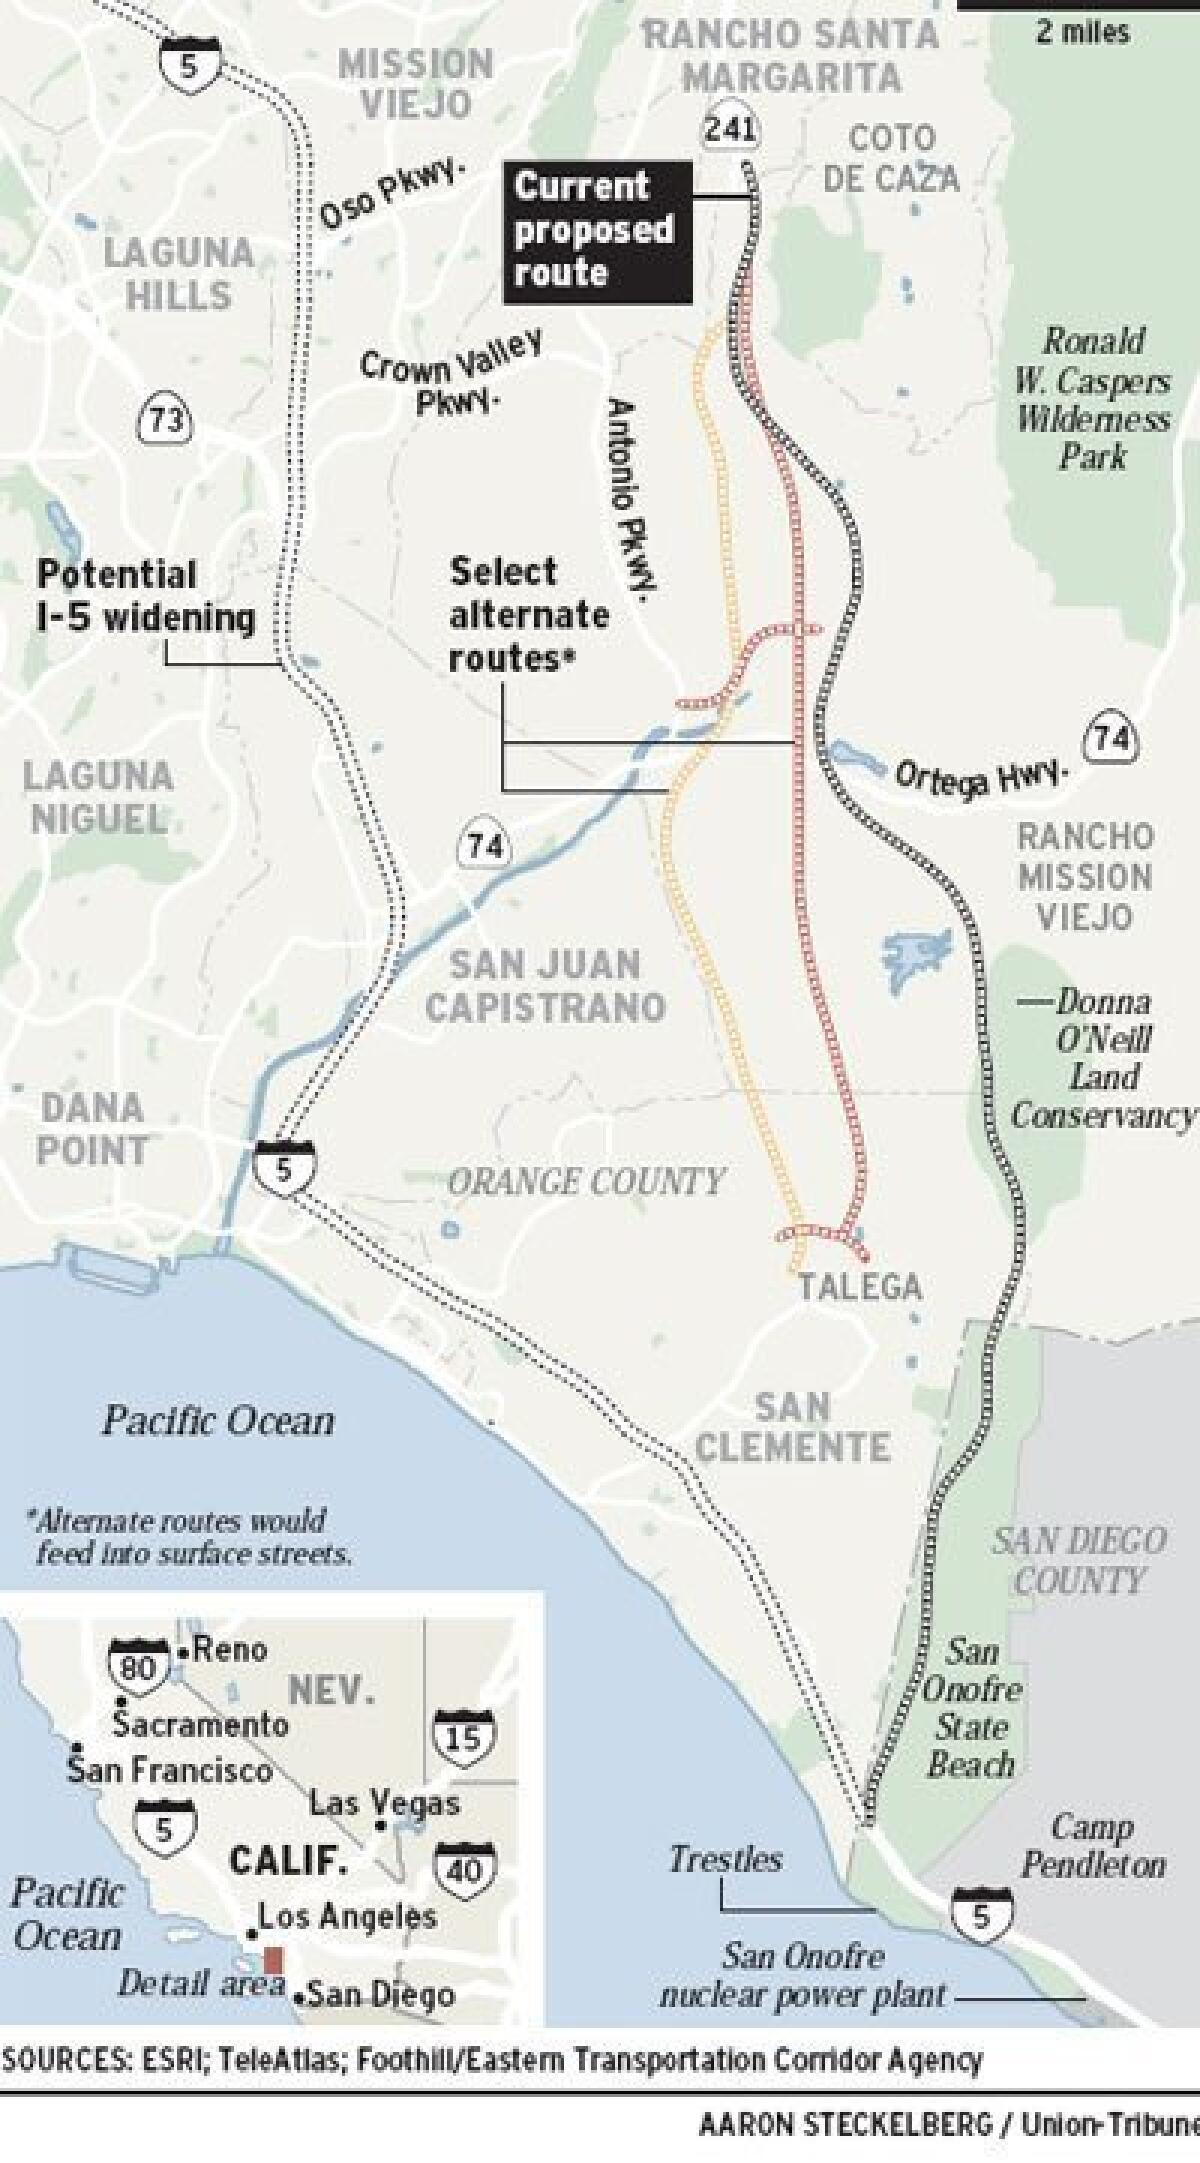 System Map - Orange County Transportation Authority